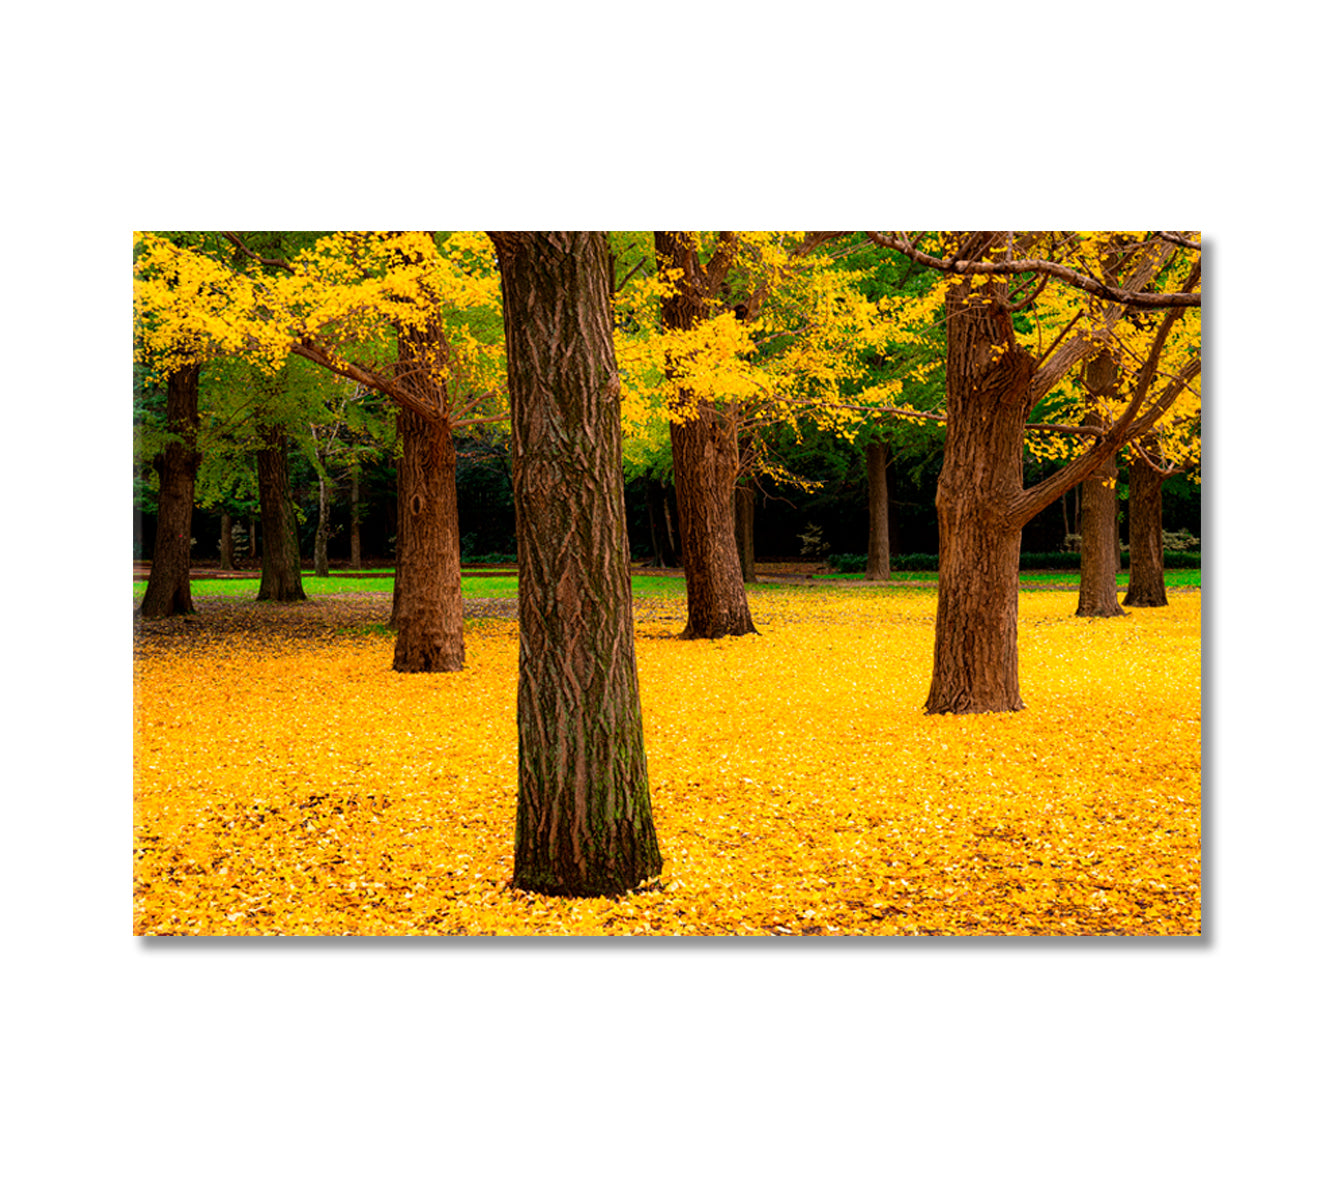 Yoyogi Park in Tokyo in Autumn Canvas Print-Canvas Print-CetArt-1 Panel-24x16 inches-CetArt